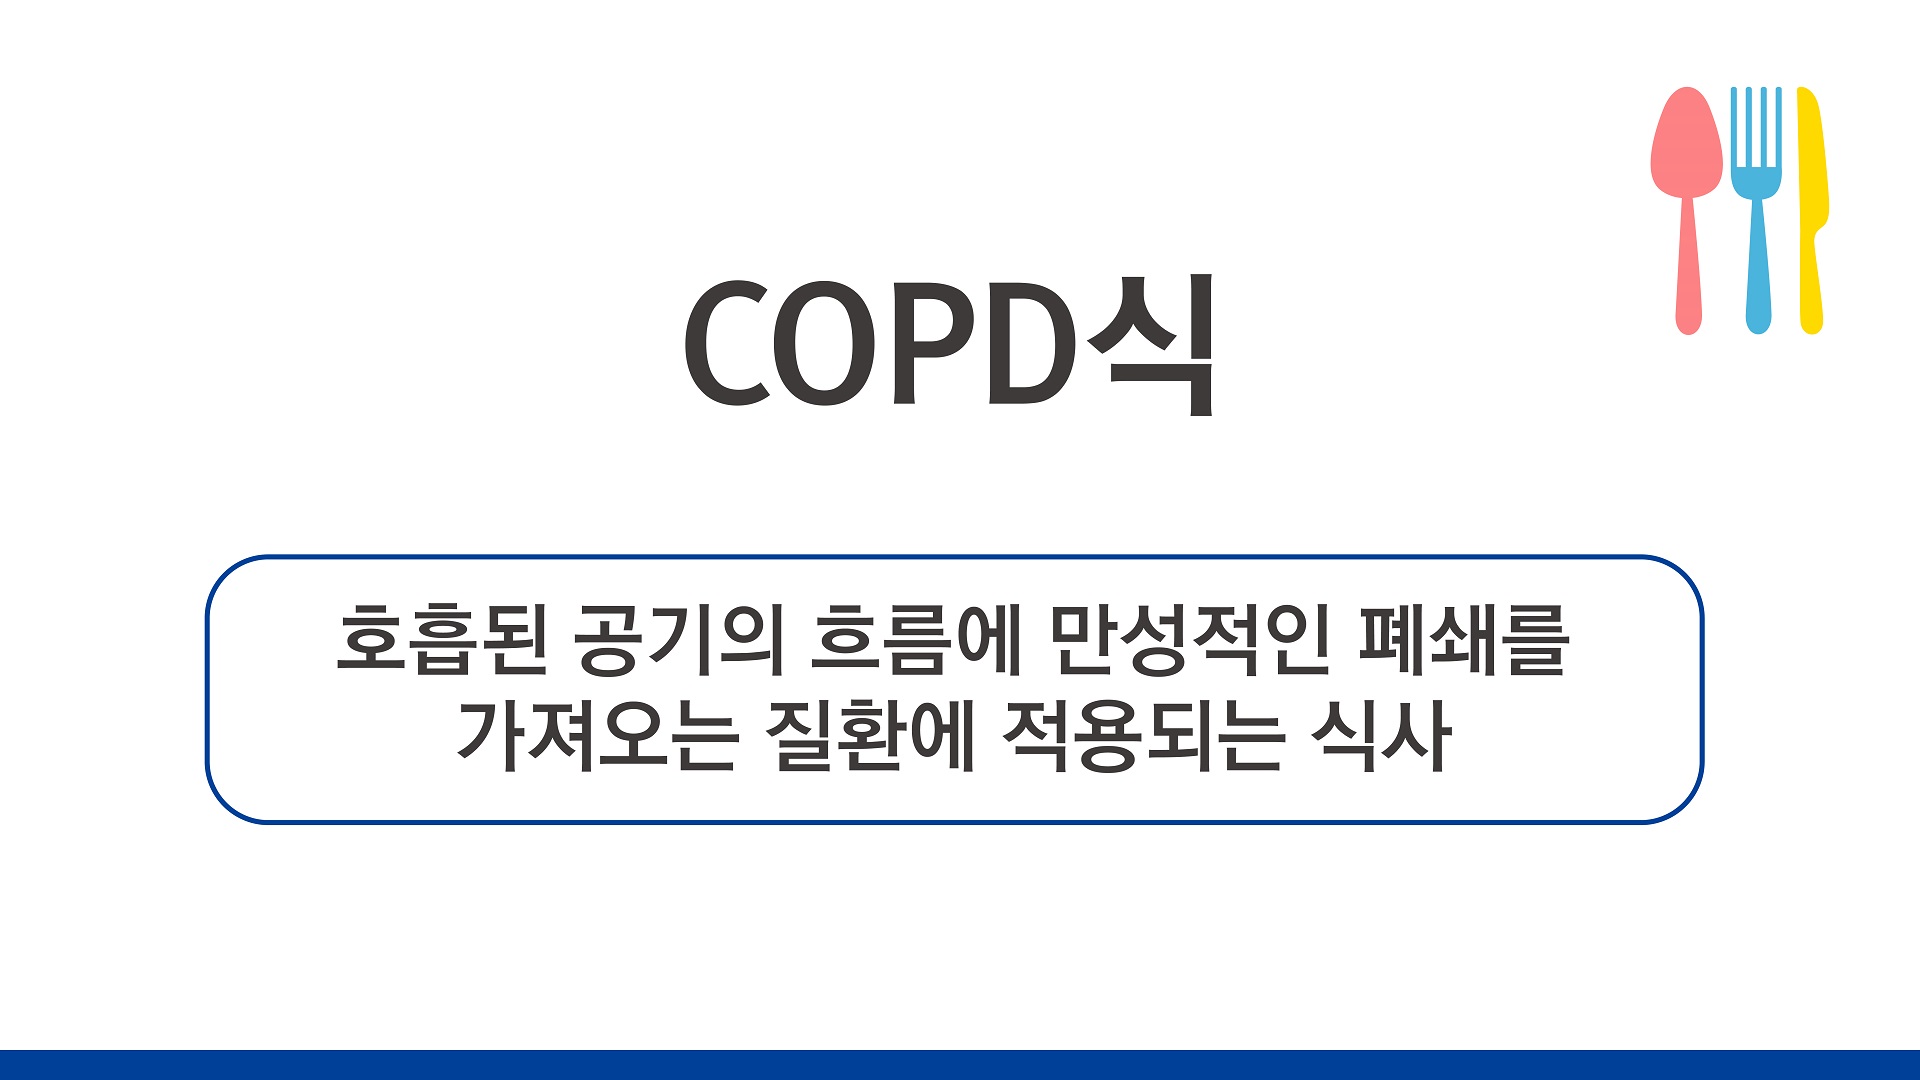 COPD식(1).jpg 관련이미지 1